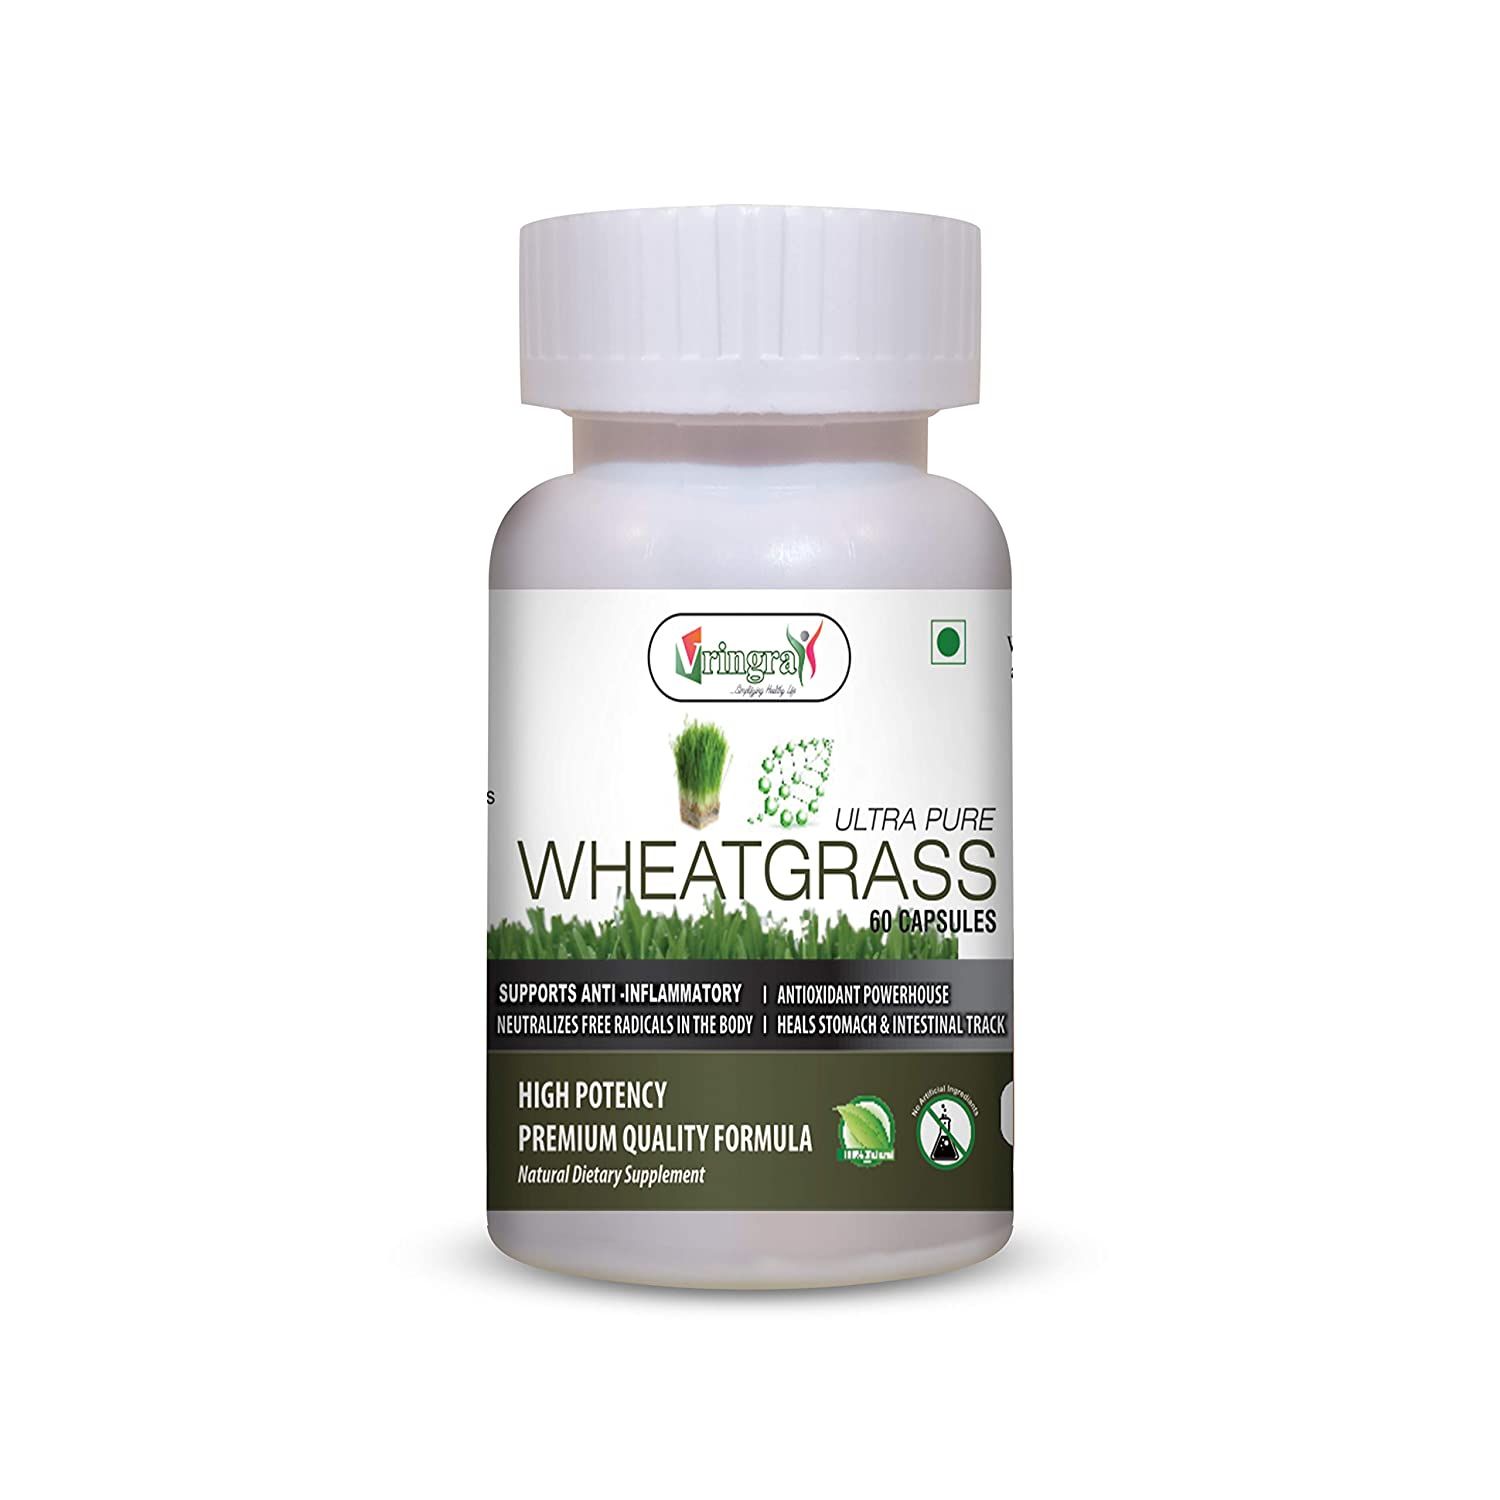 Vringra World Class Pure Wheatgrass Capsules Image